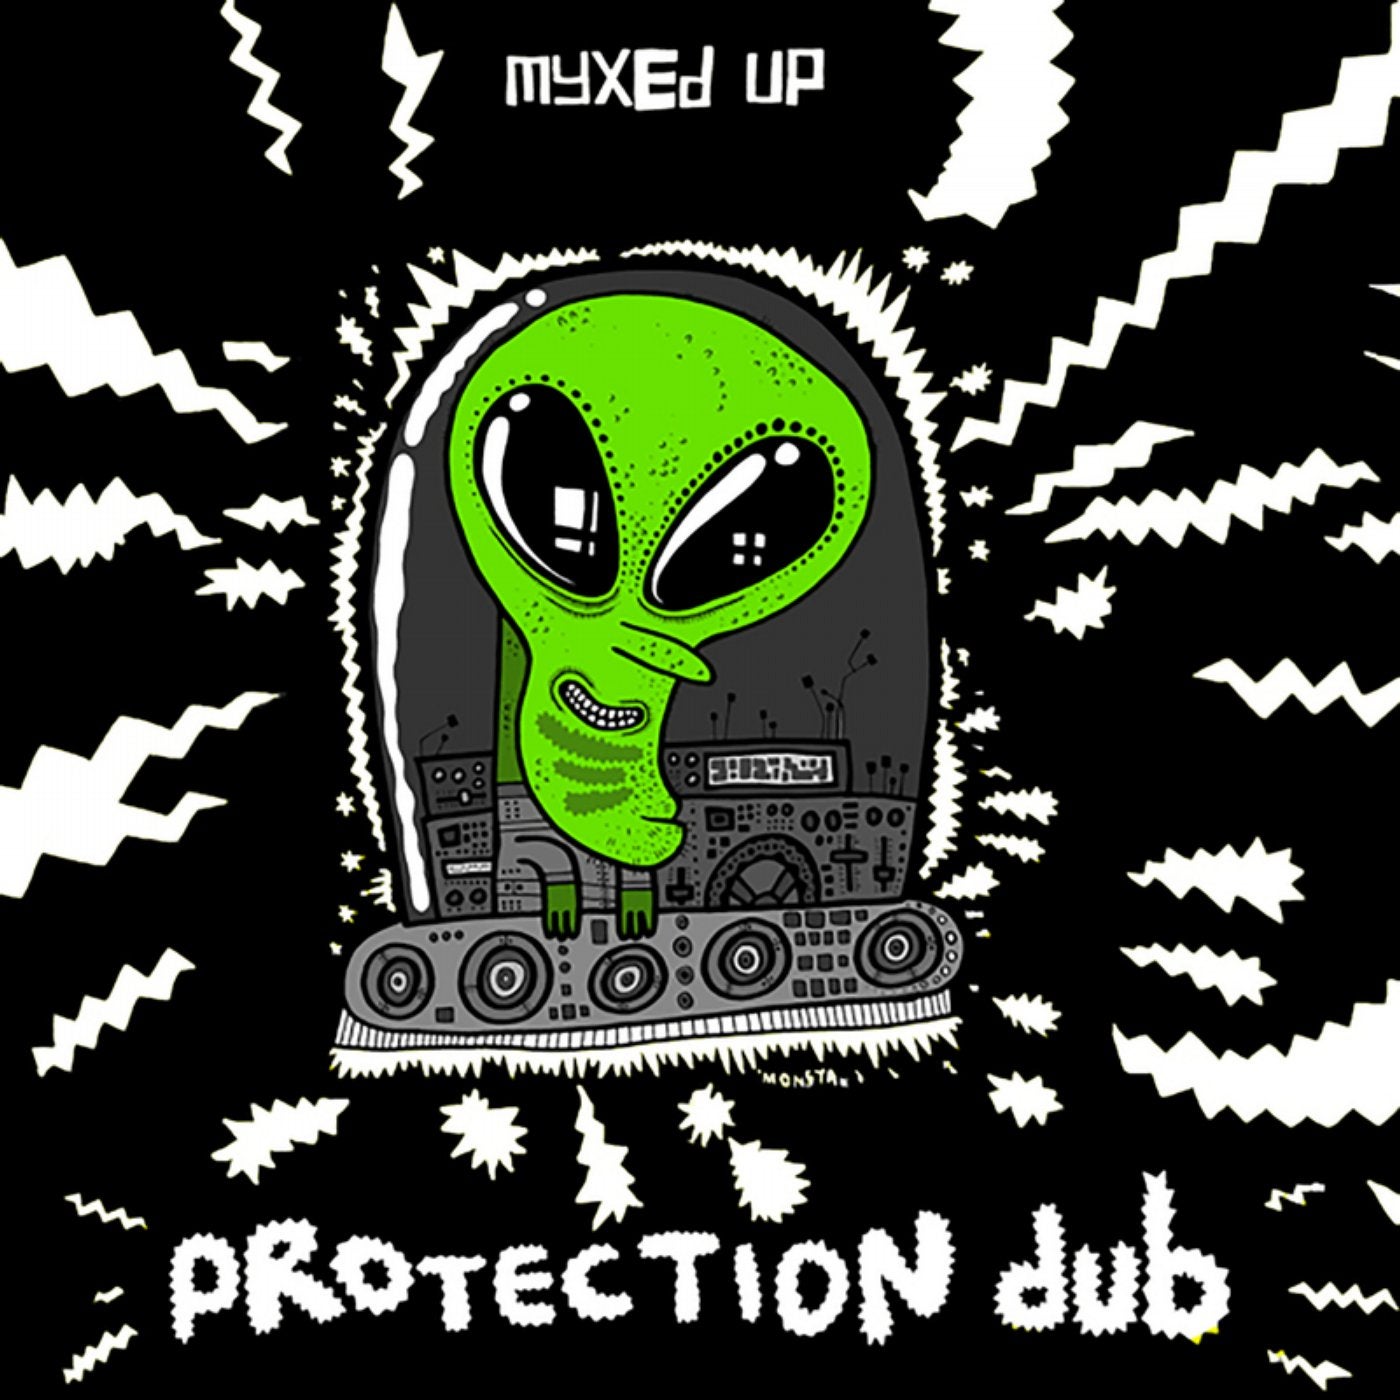 Protection Dub